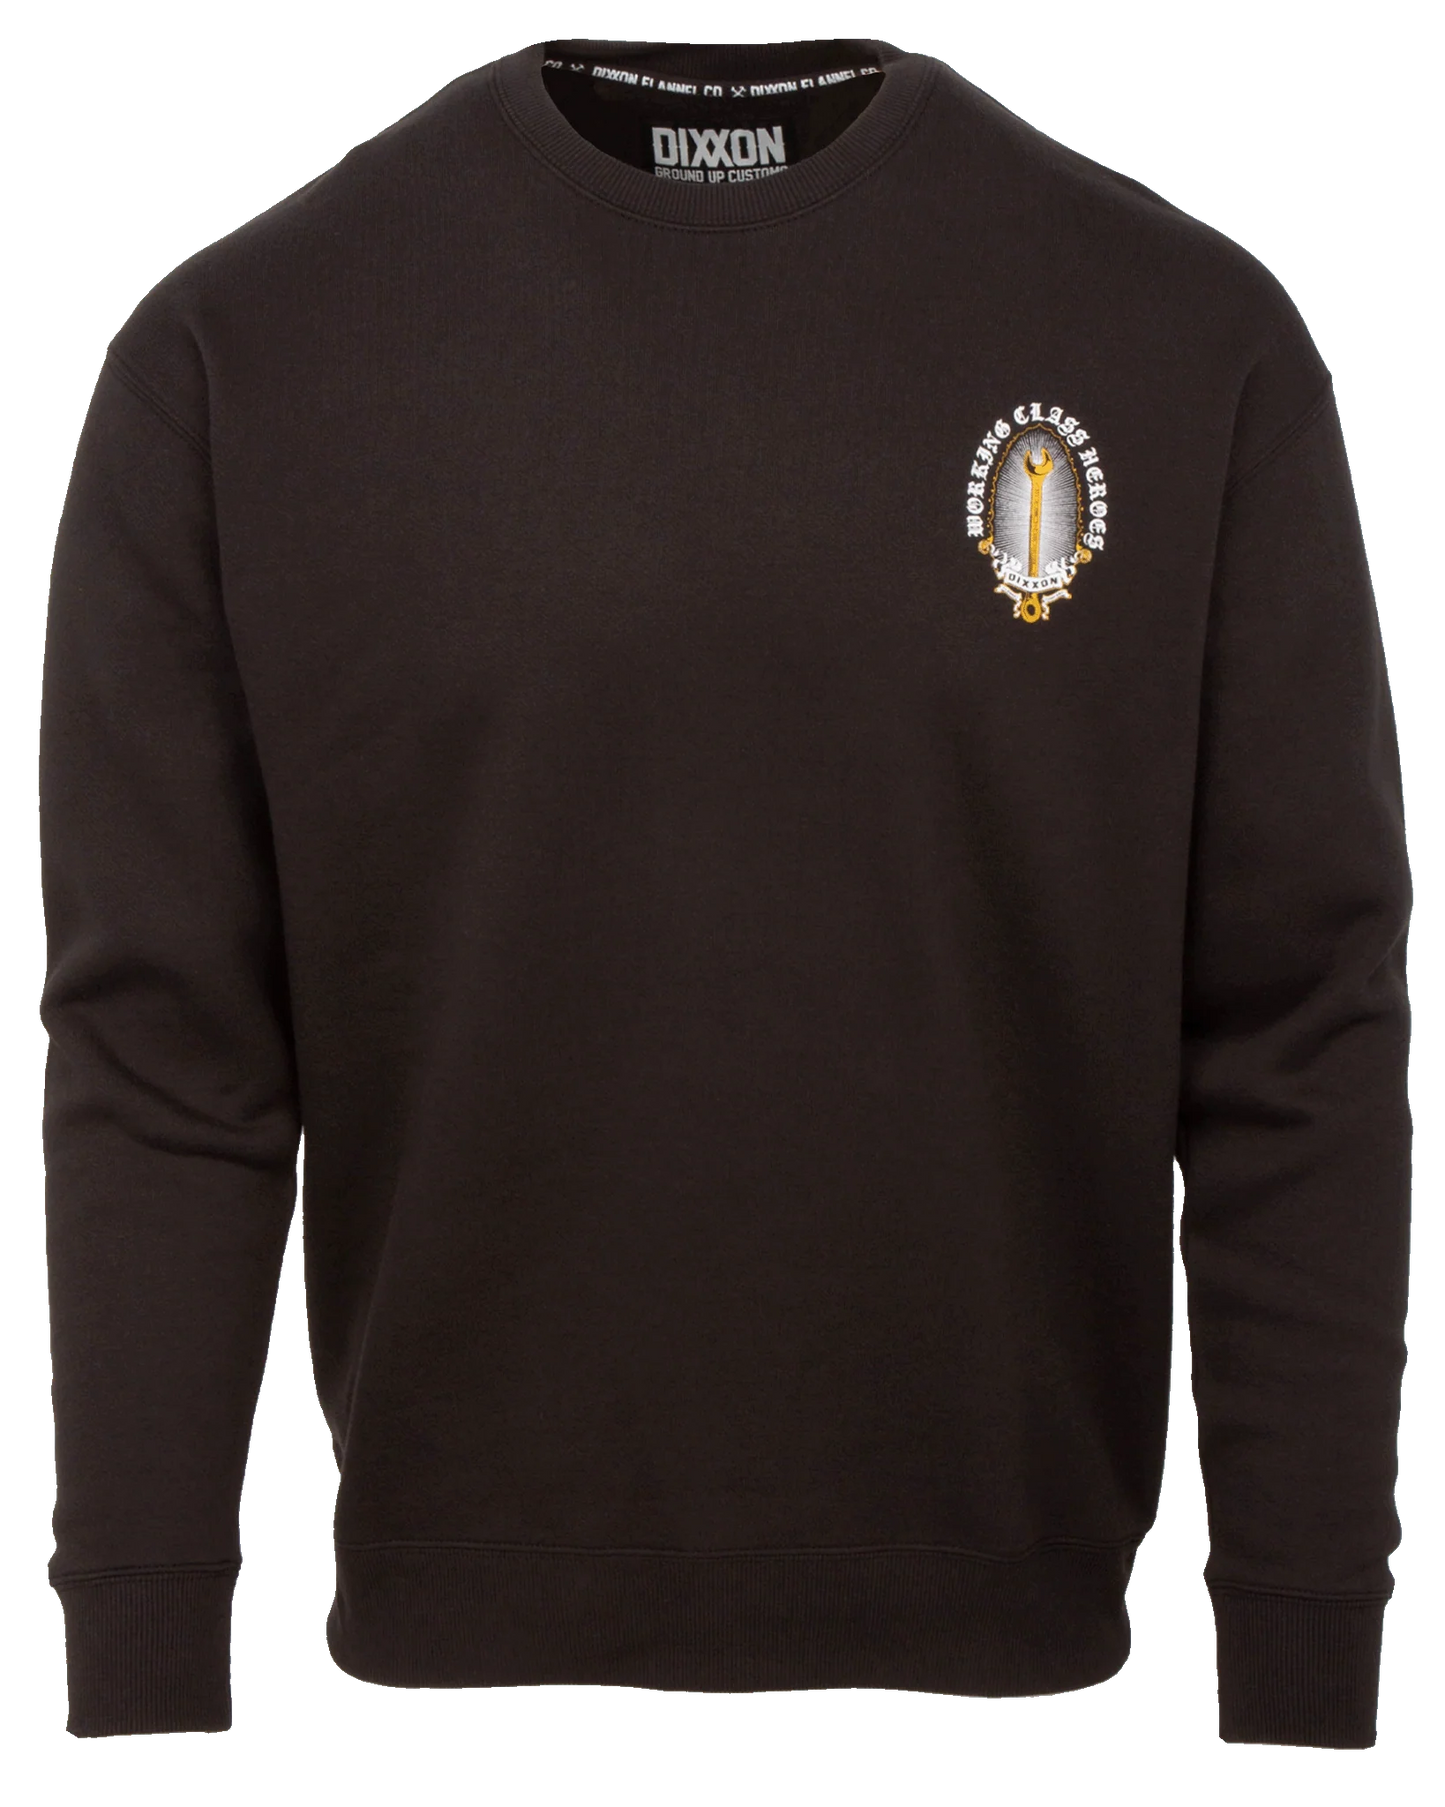 Pray Crewneck Sweatshirt by Dixxon Flannel Co.